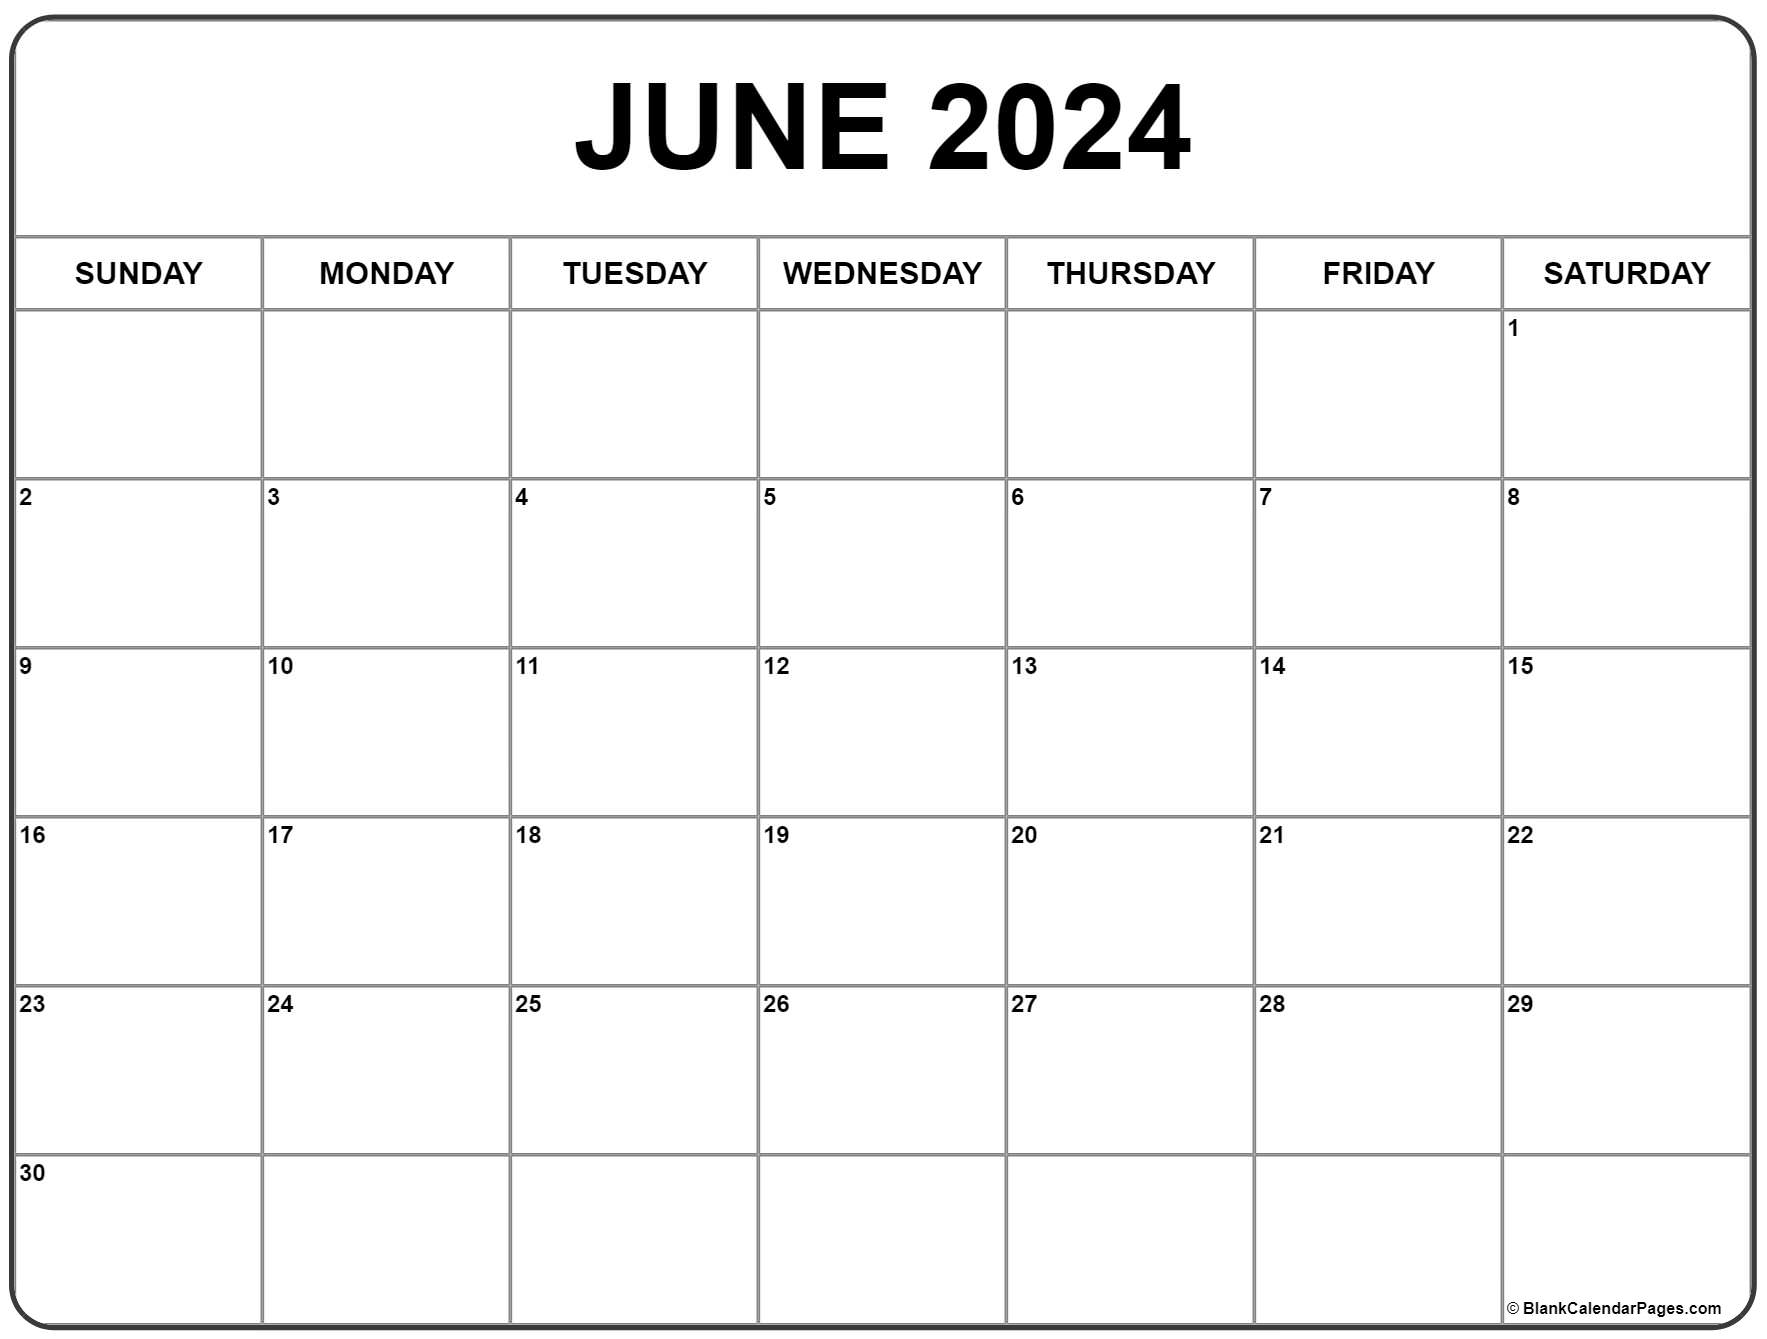 June 2024 Calendar | Free Printable Calendar for Calendar June 2024 Printable Free